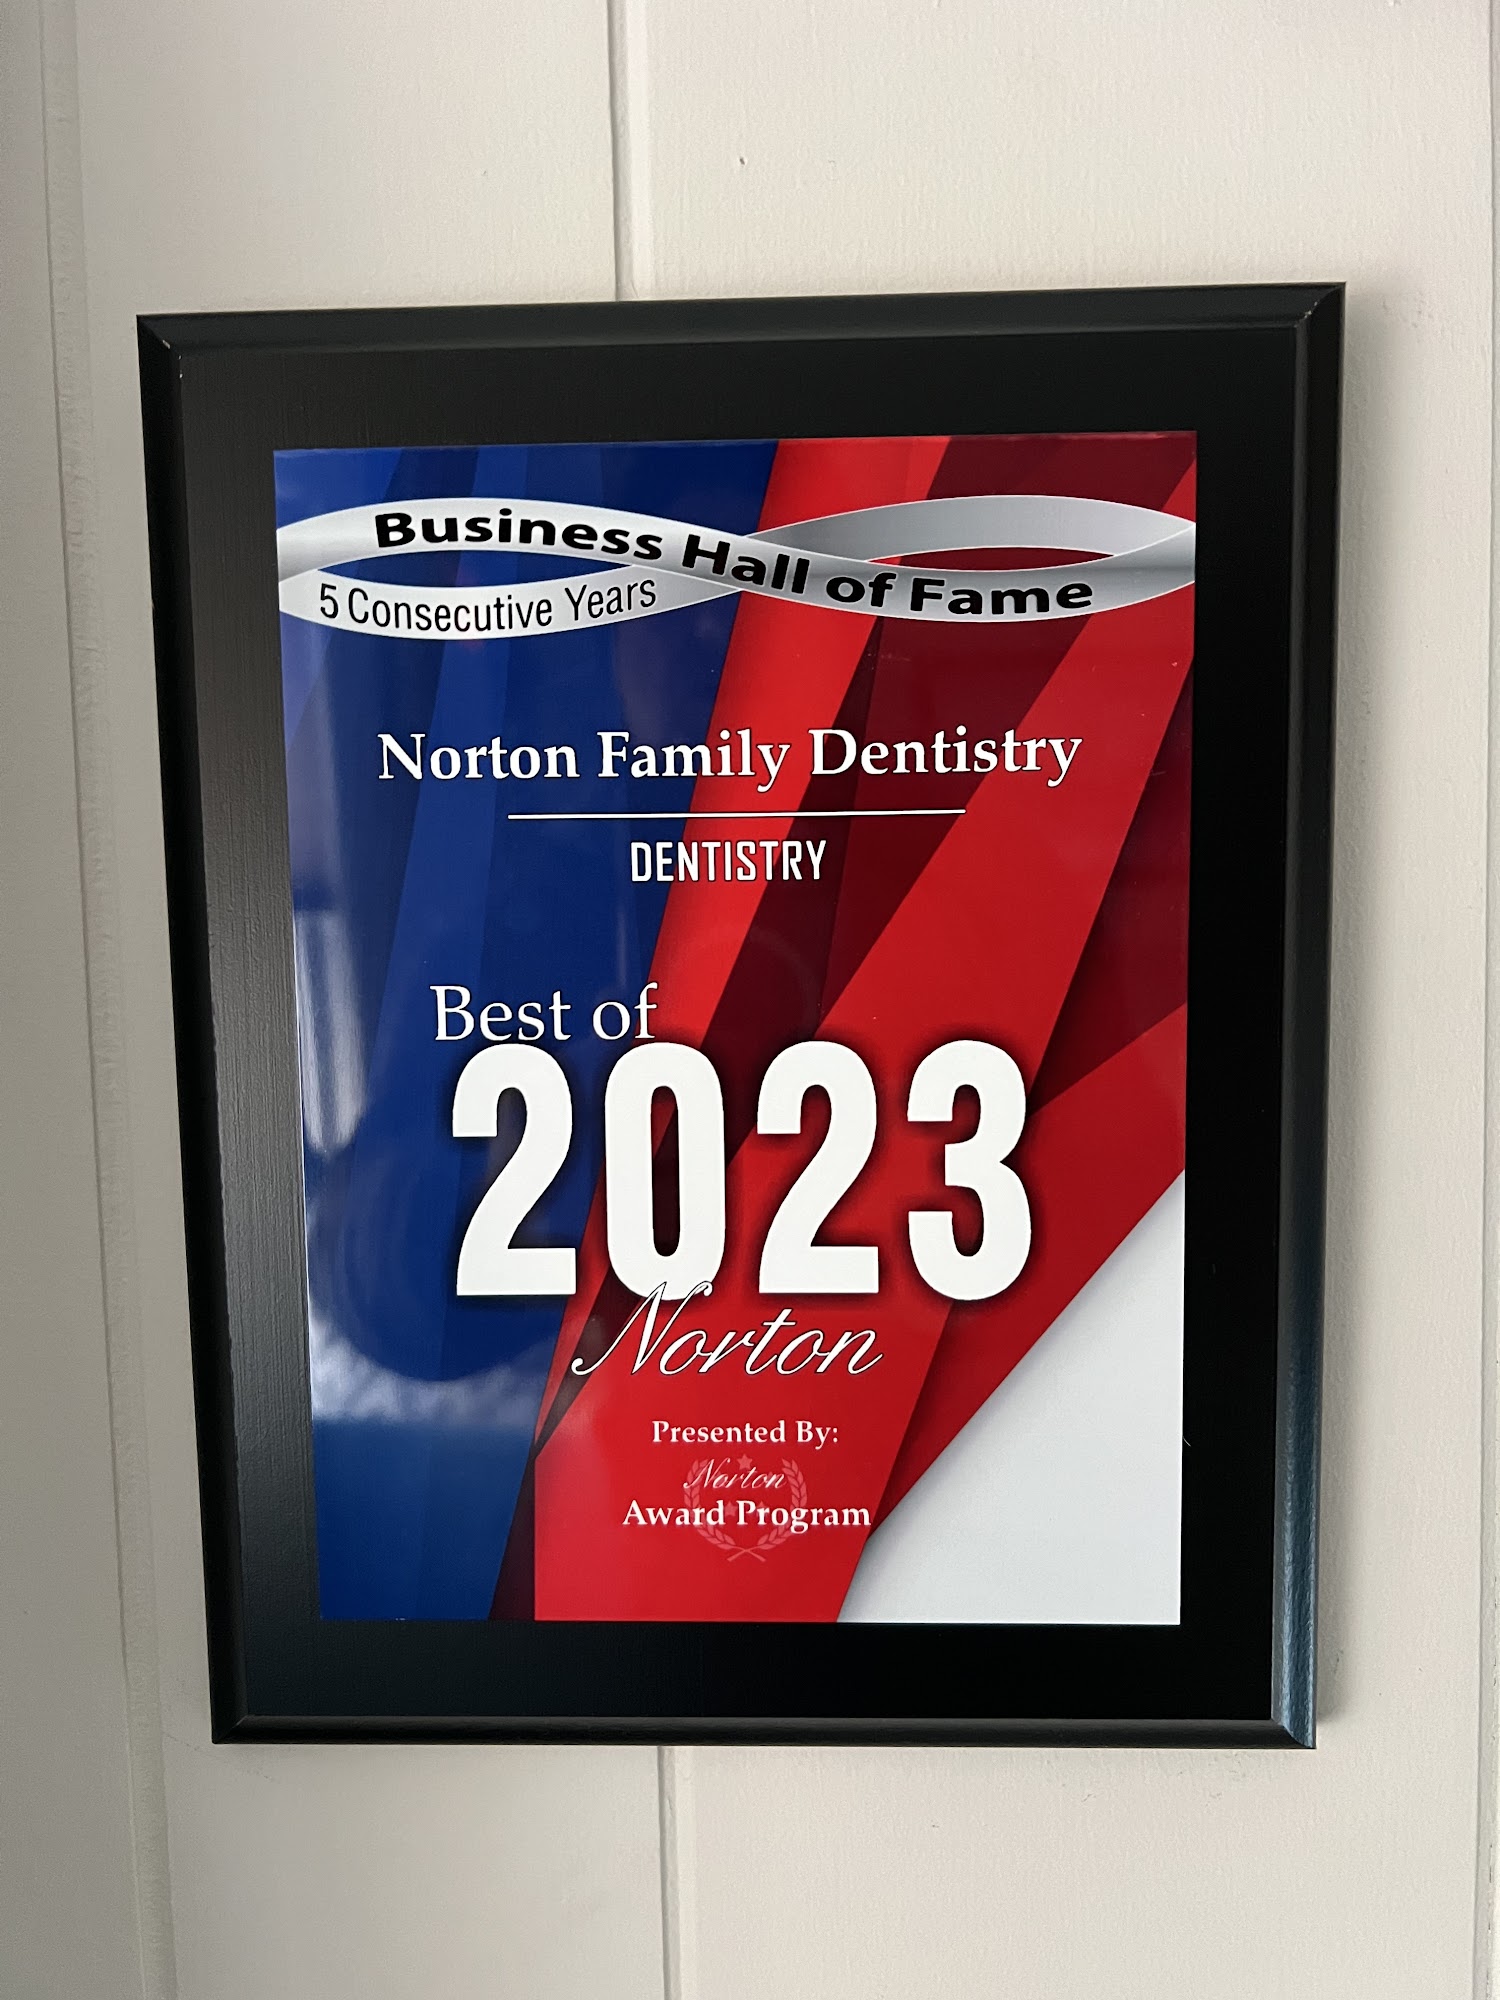 Norton Family Dentistry 275 West Main Street, MA-123, Norton Massachusetts 02766